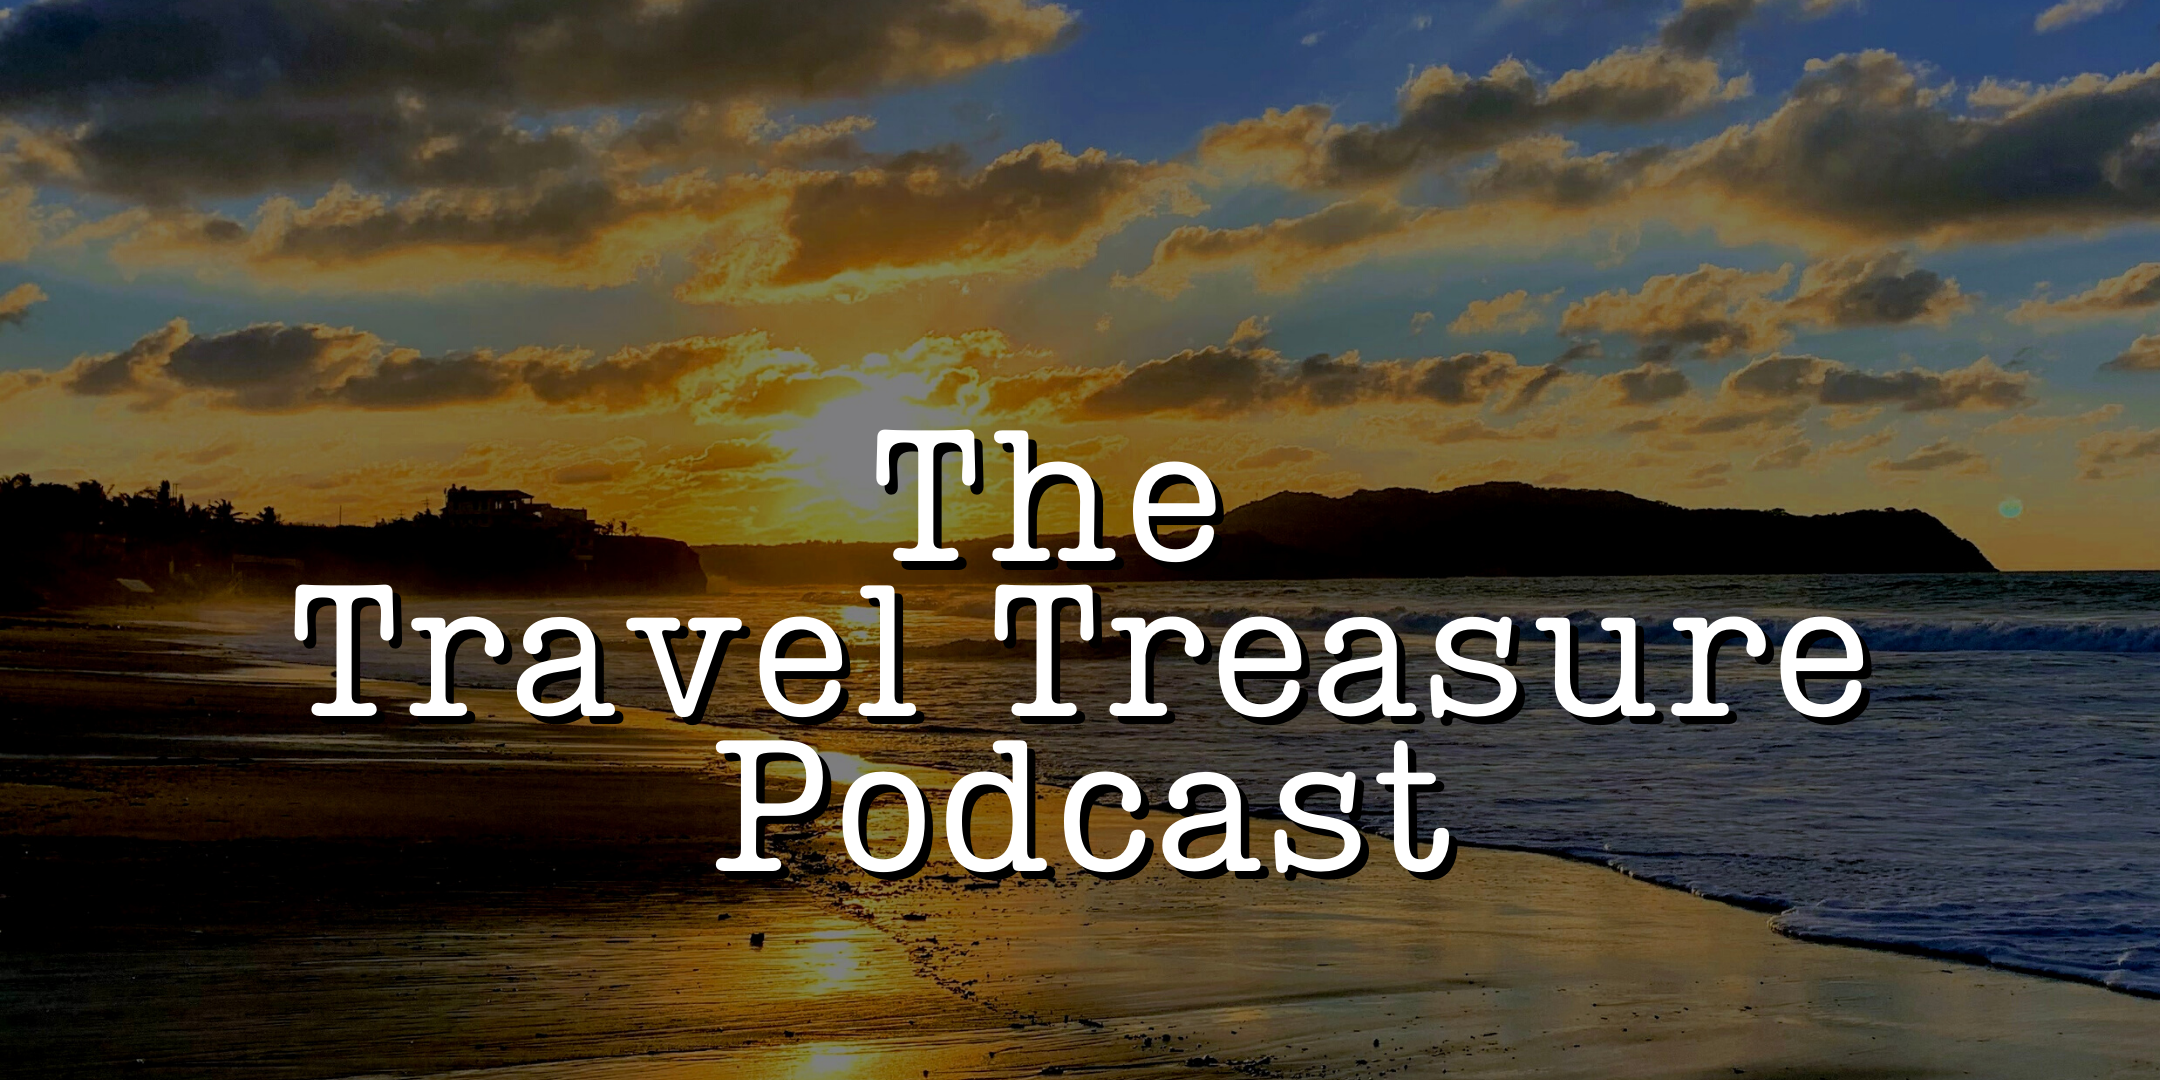 Travel Treasure Podcast